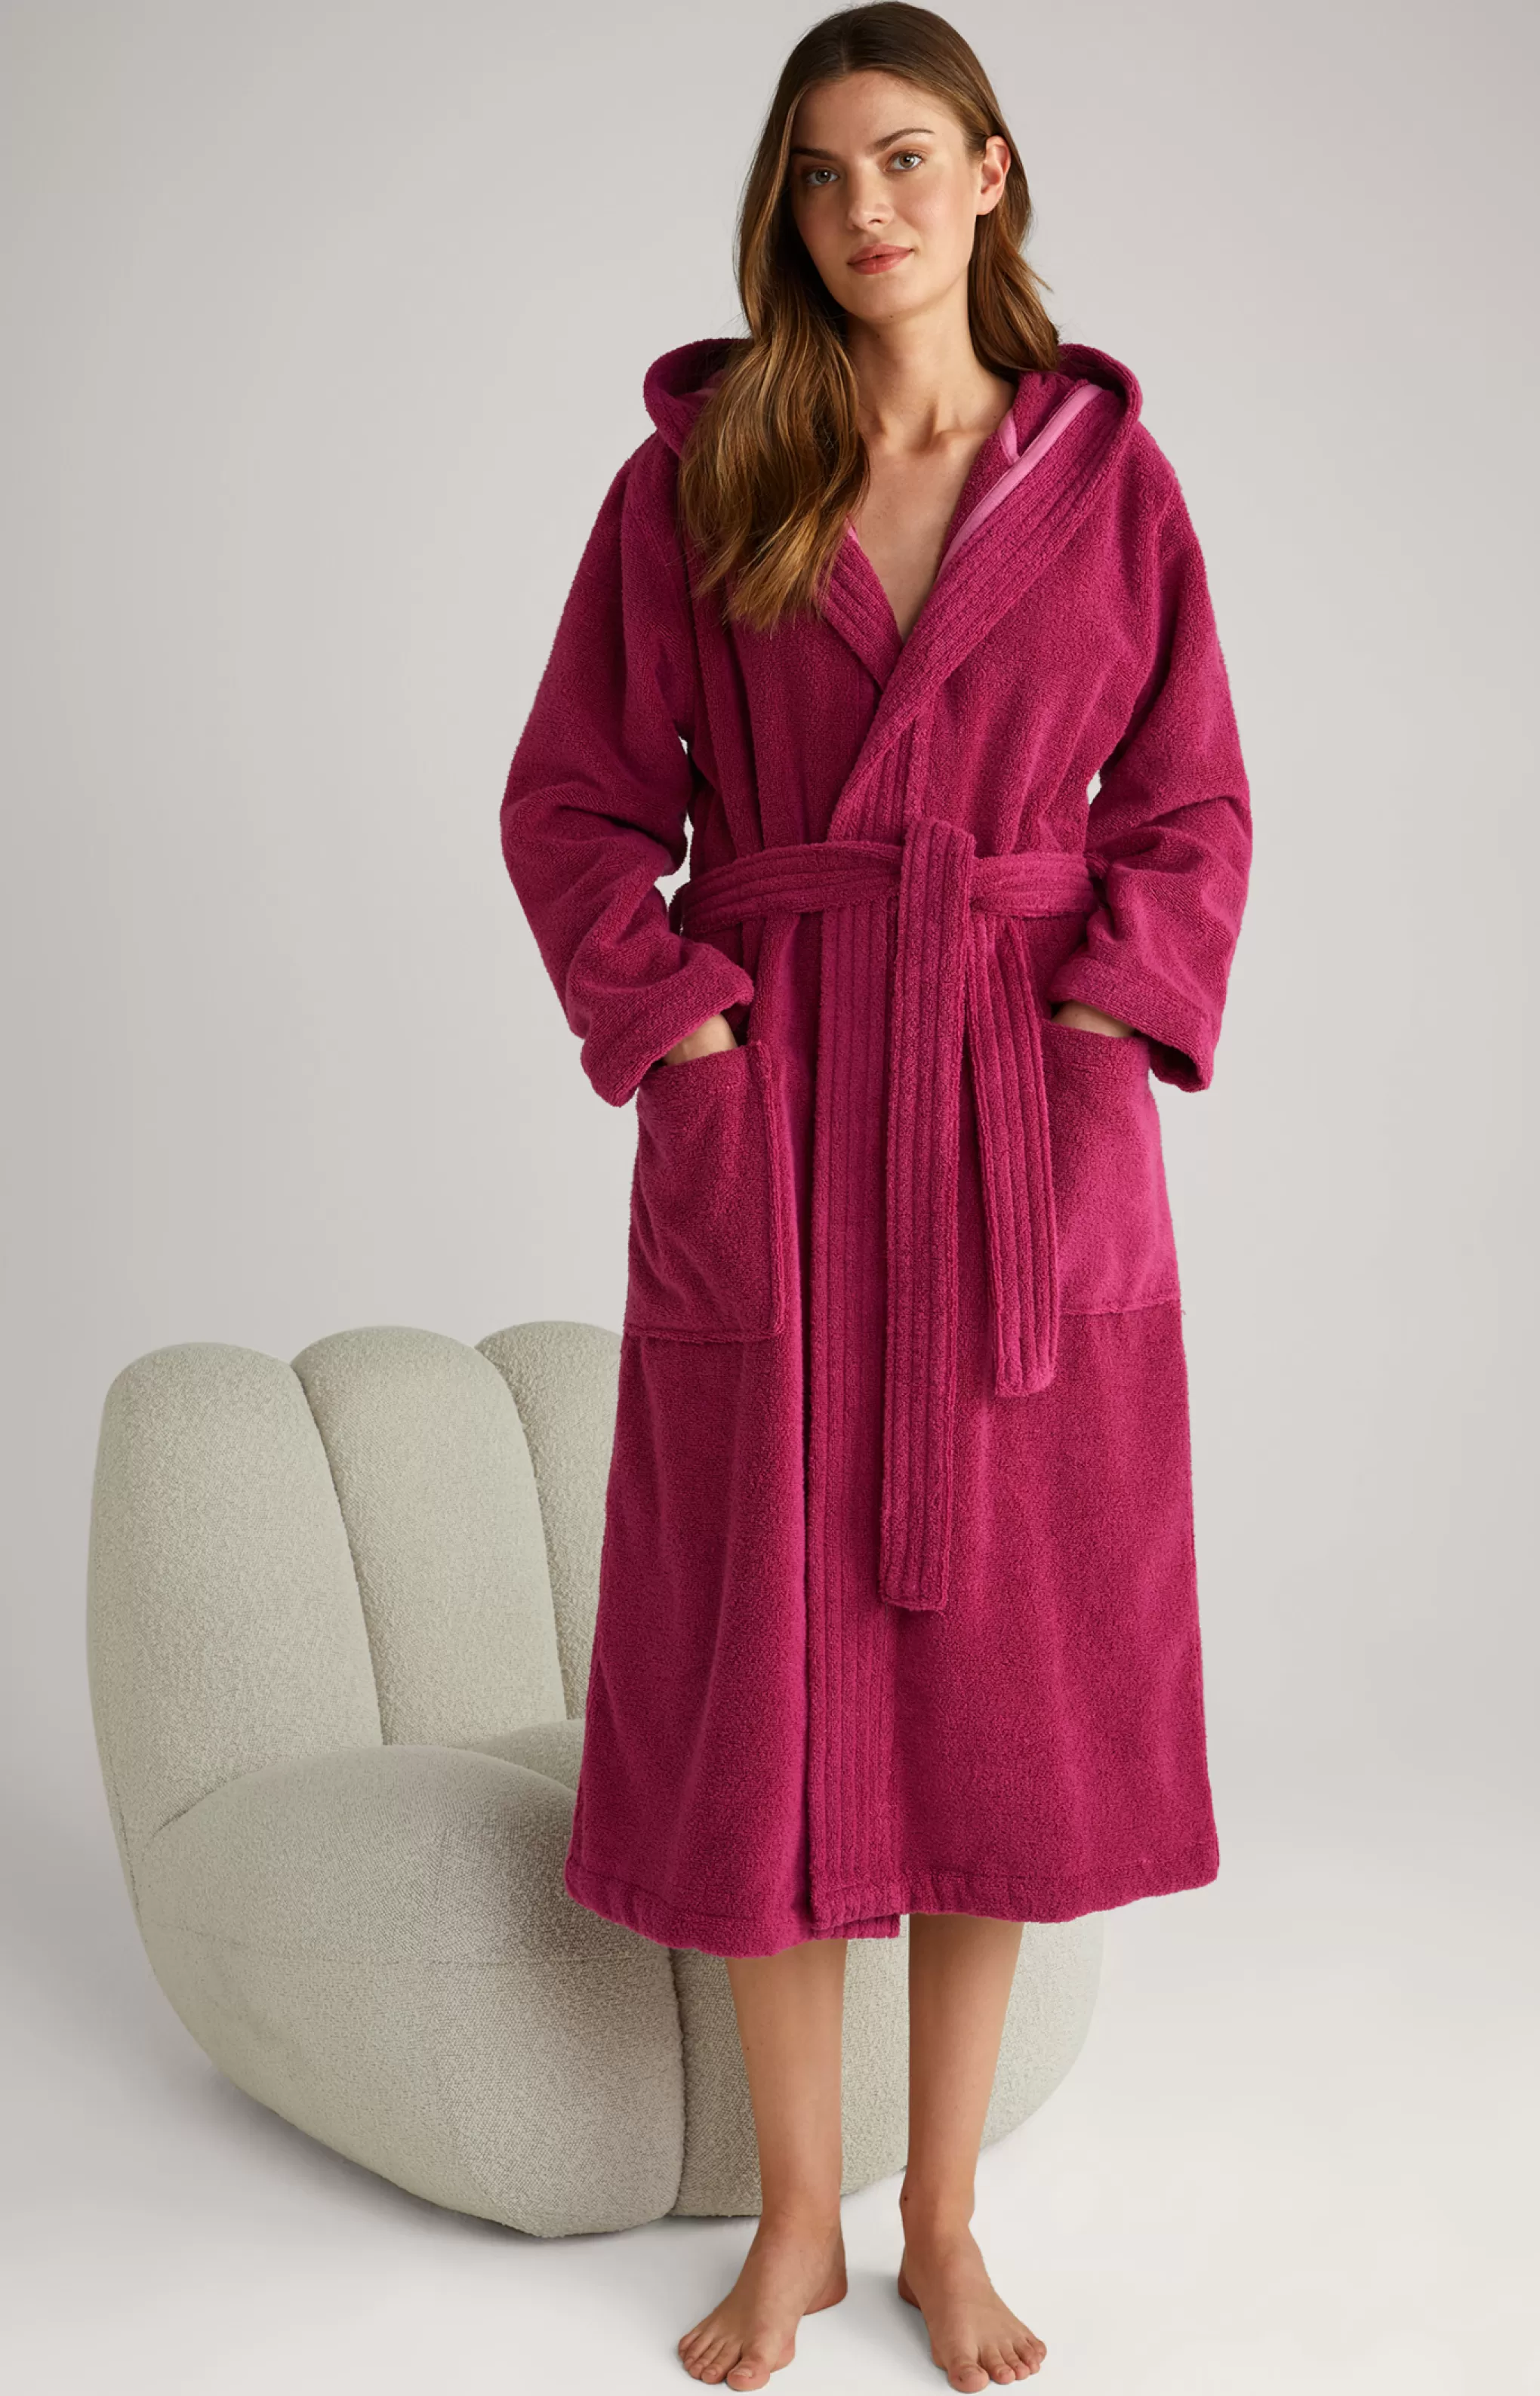 Bathrobes | Loungewear & Nightwear*JOOP Bathrobes | Loungewear & Nightwear Women’s bathrobe in violet